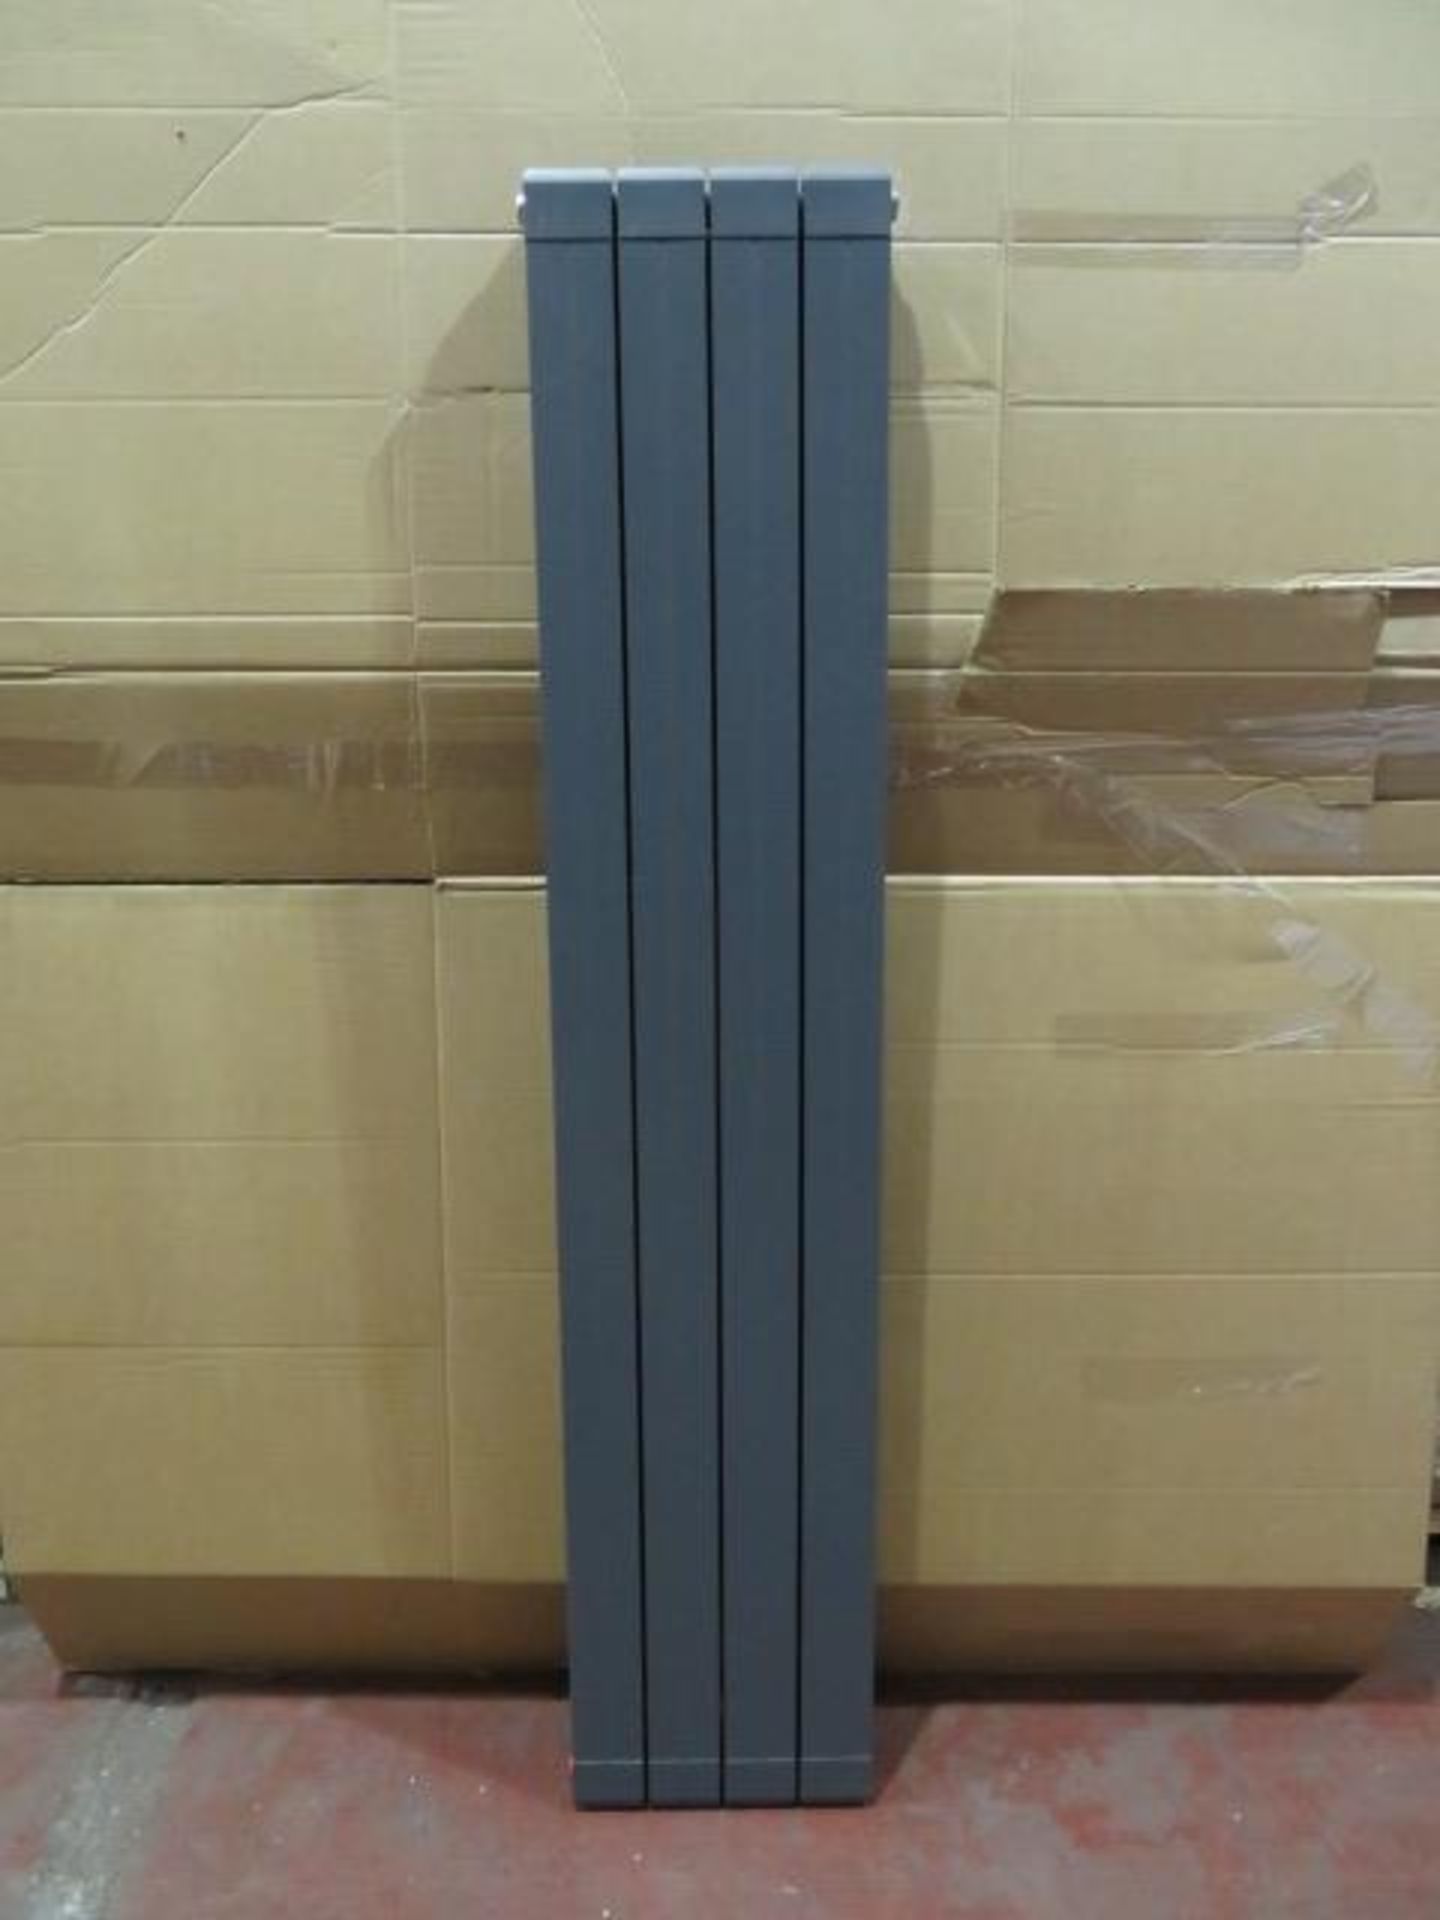 (UR20) 1600x315mm Anthracite Flat Panel Vertical Radiator. RRP £449.99.Ultra-modern in design ... - Image 4 of 4